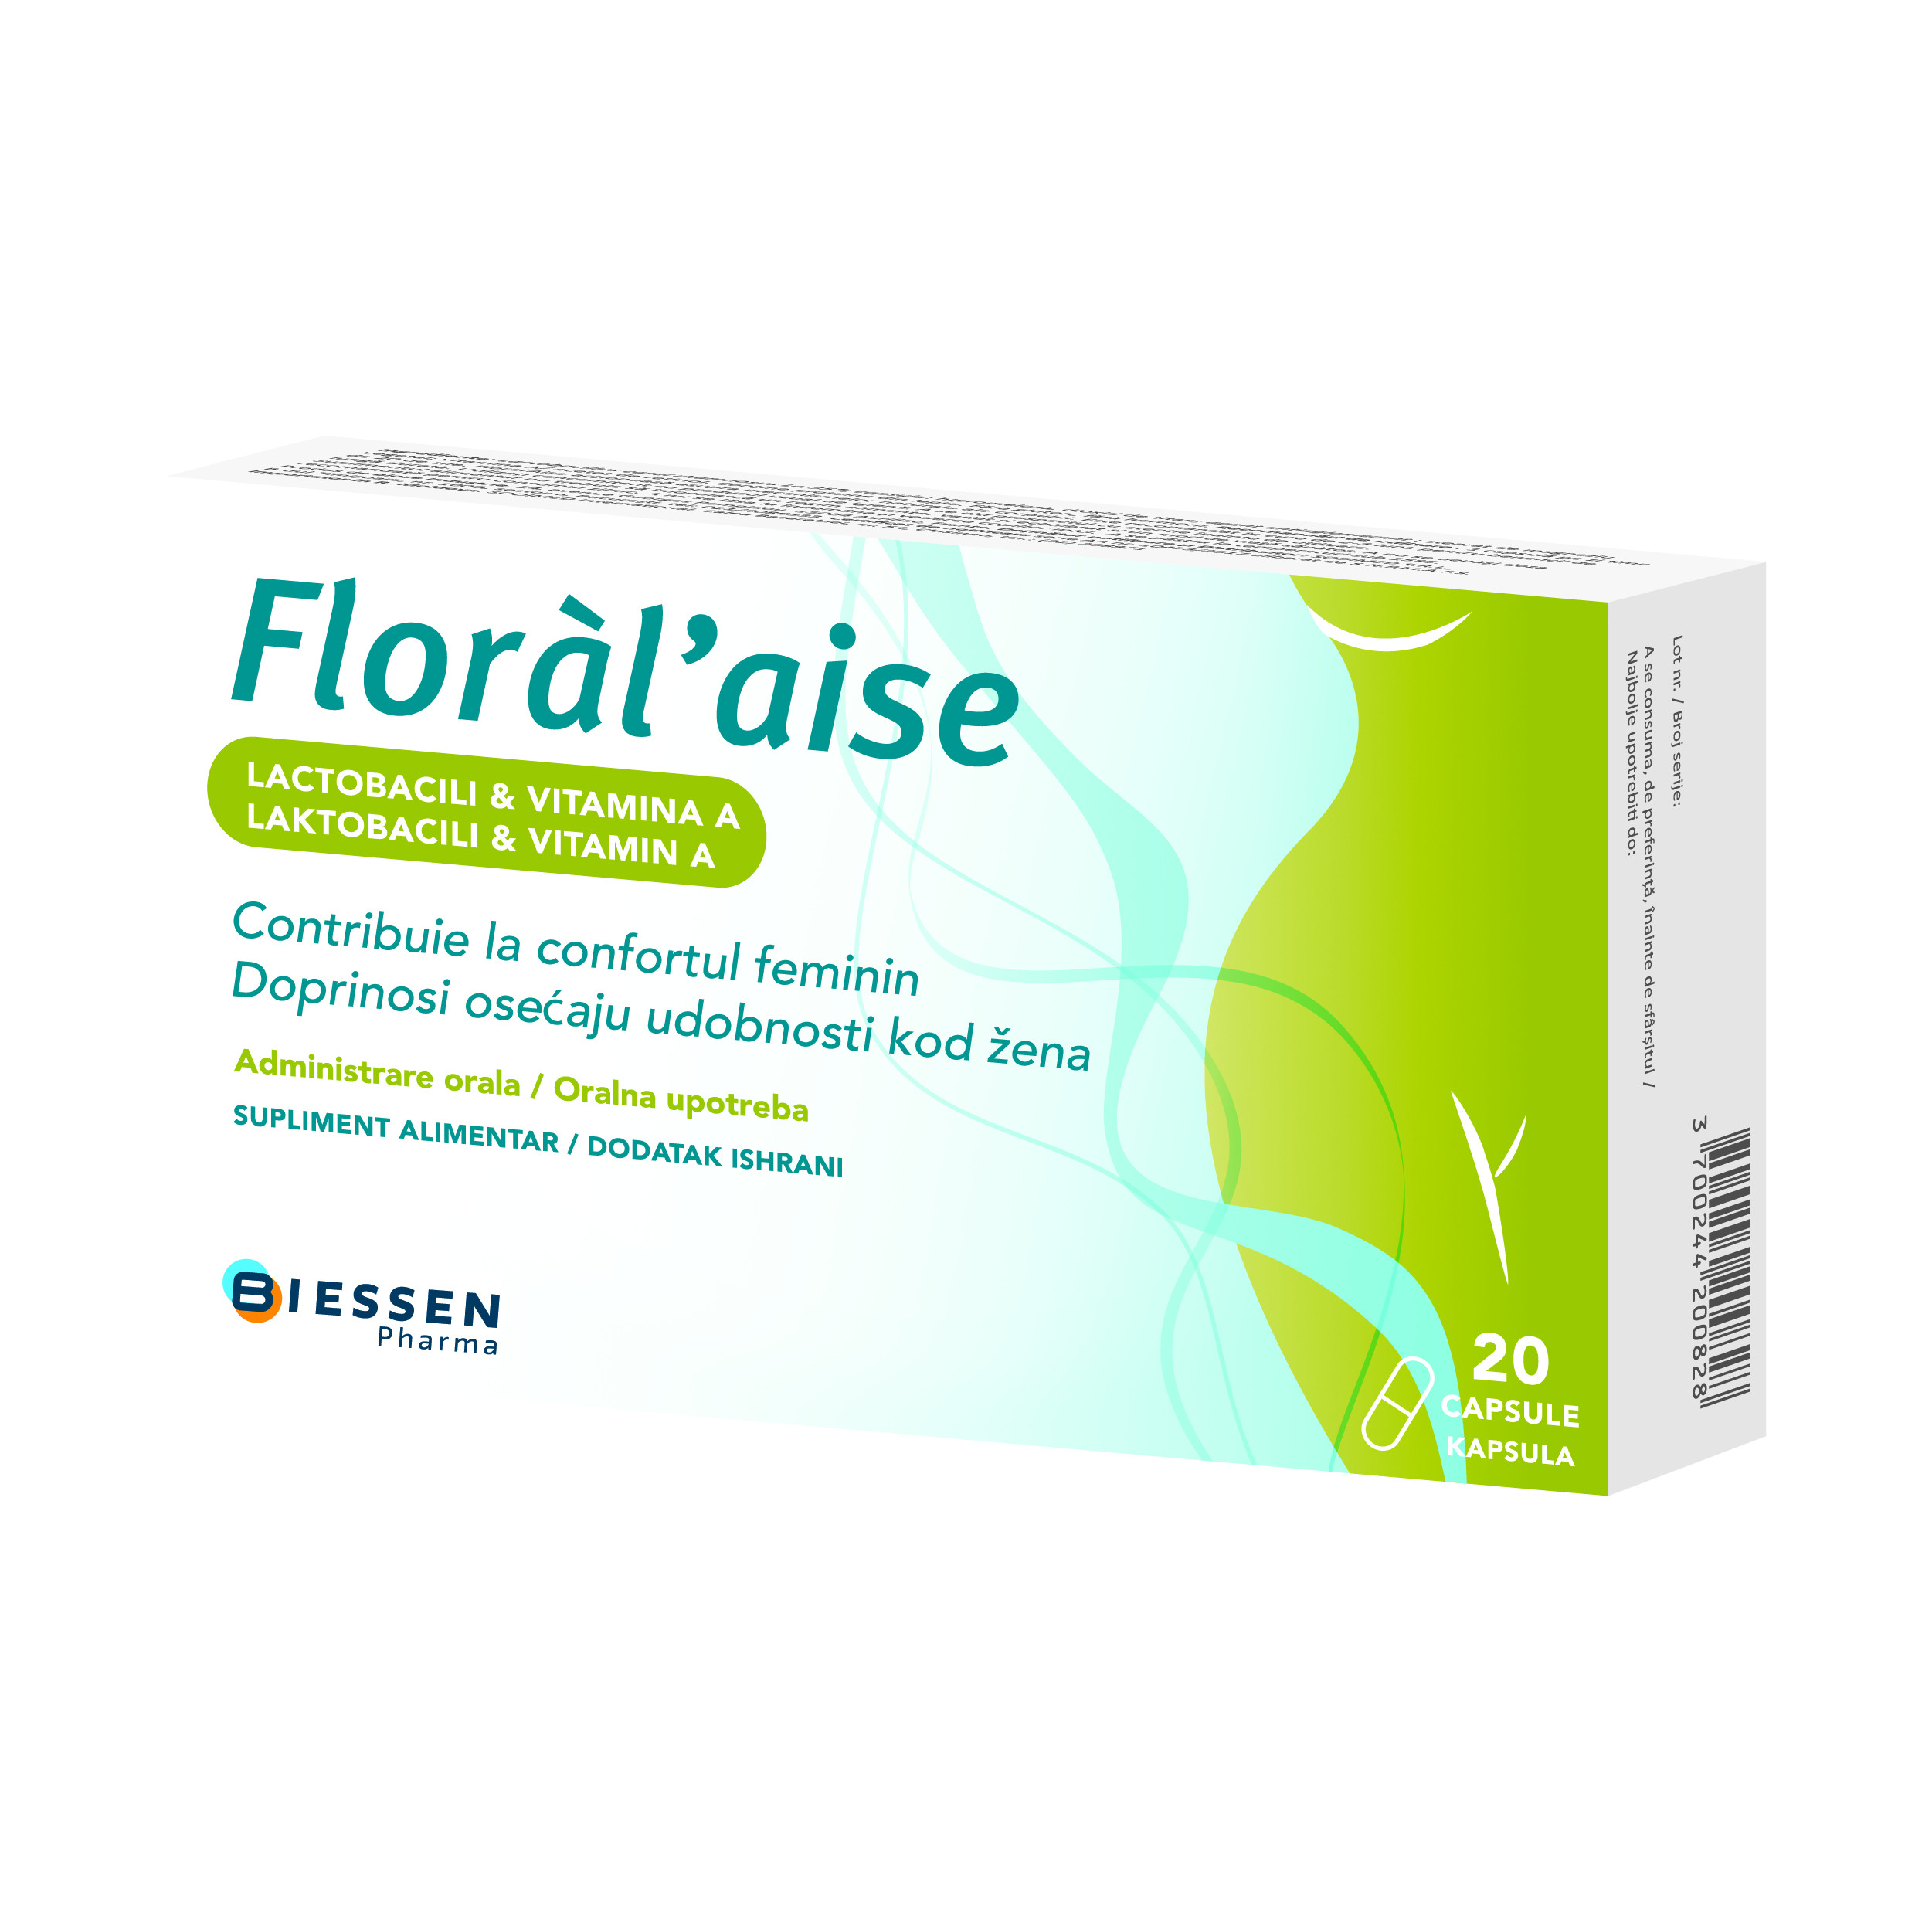 Floral’aise, 20 capsule Biessen Pharma imagine teramed.ro